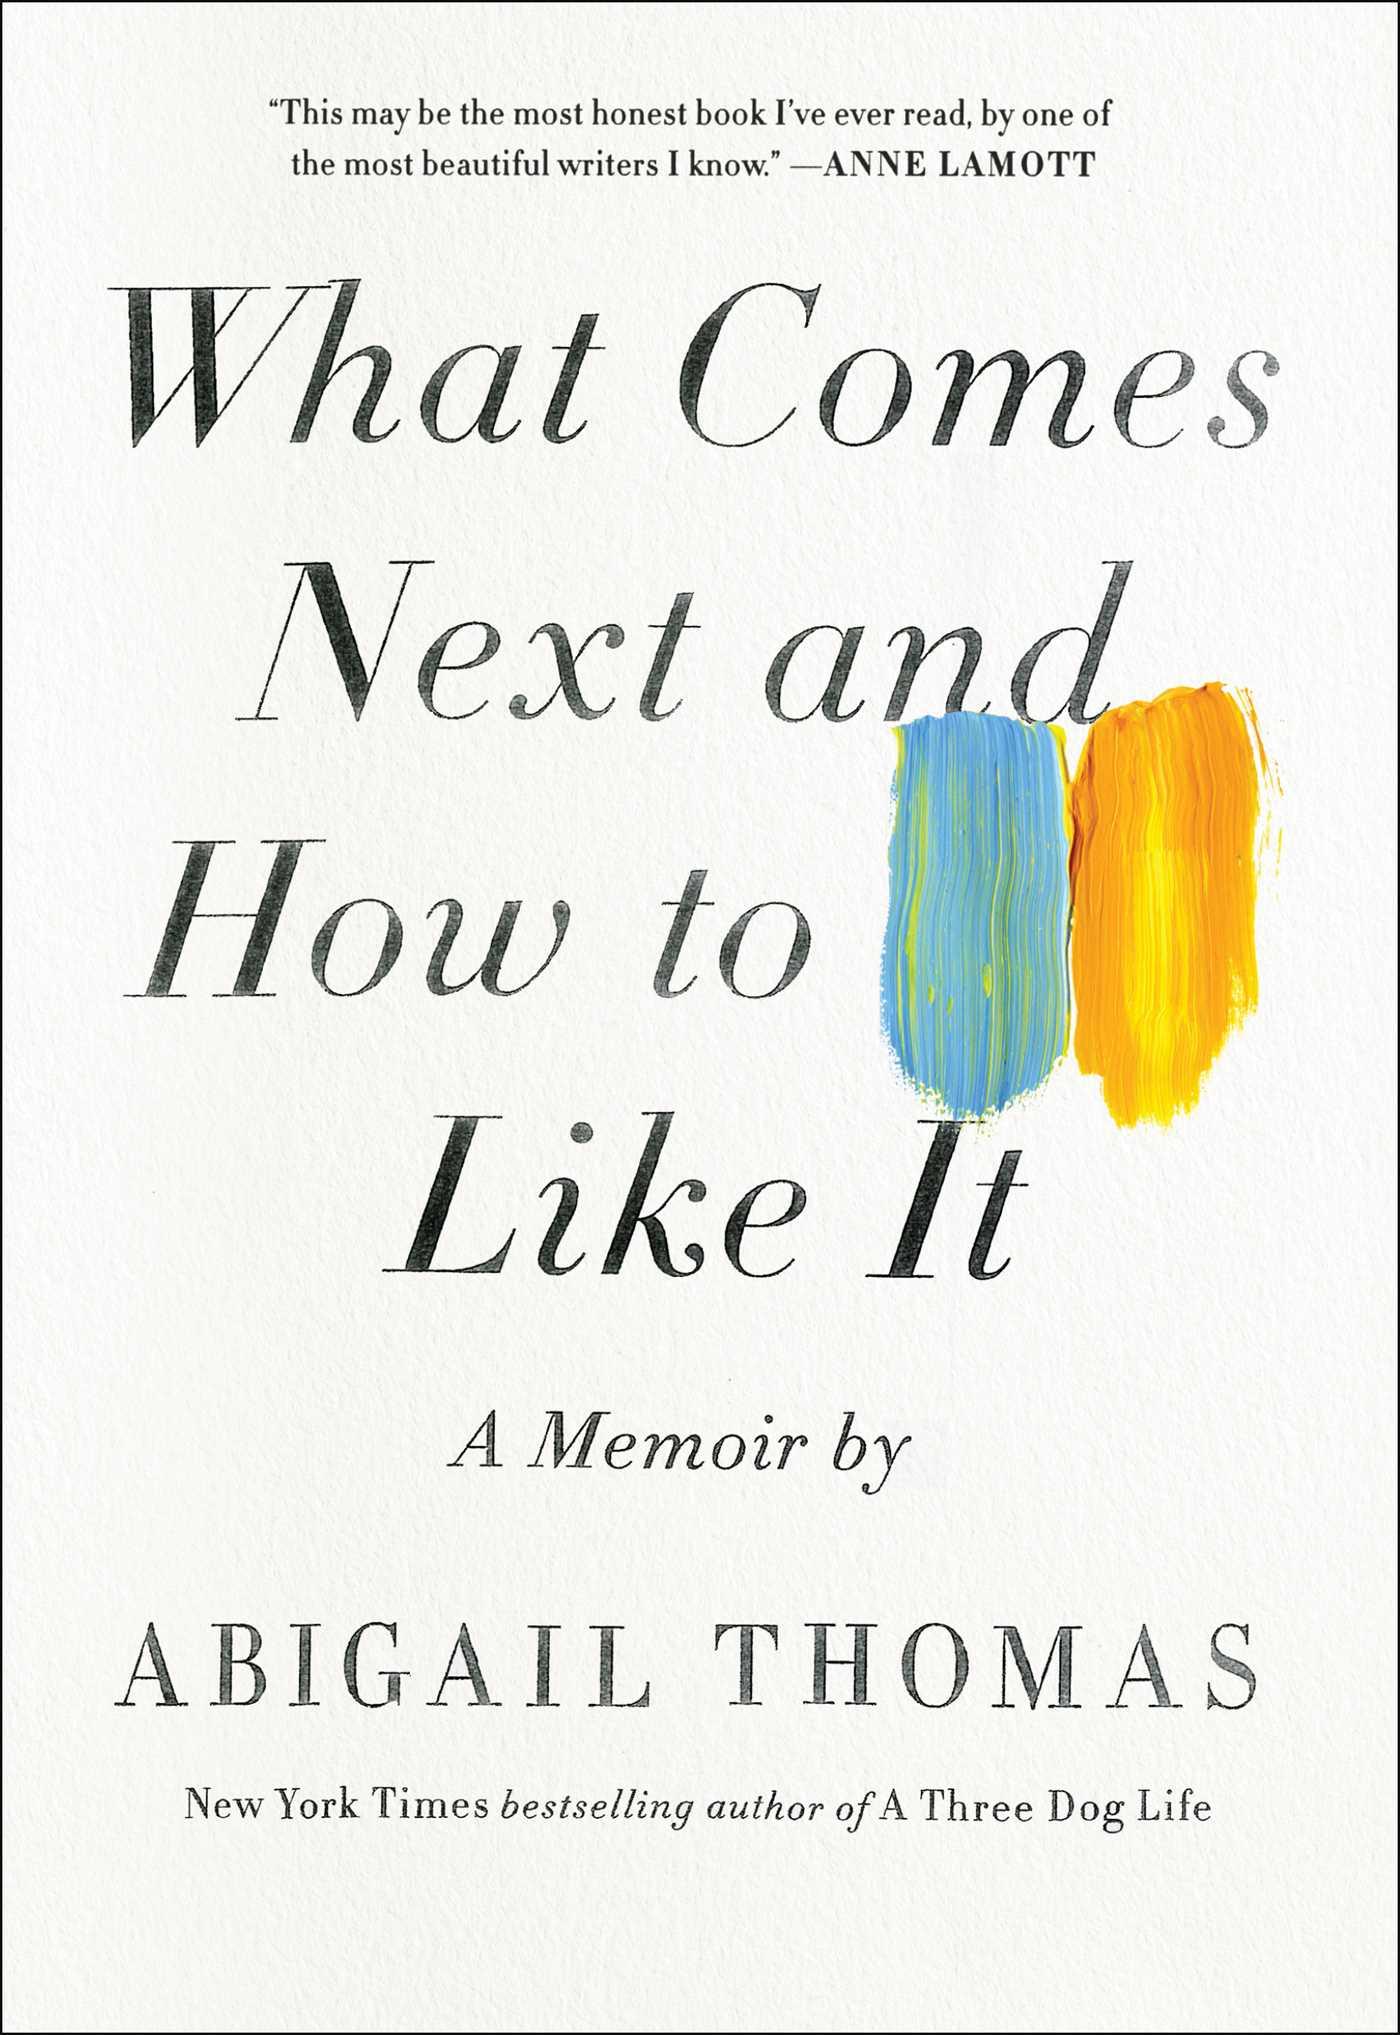 #1421 – Abigail Thomas